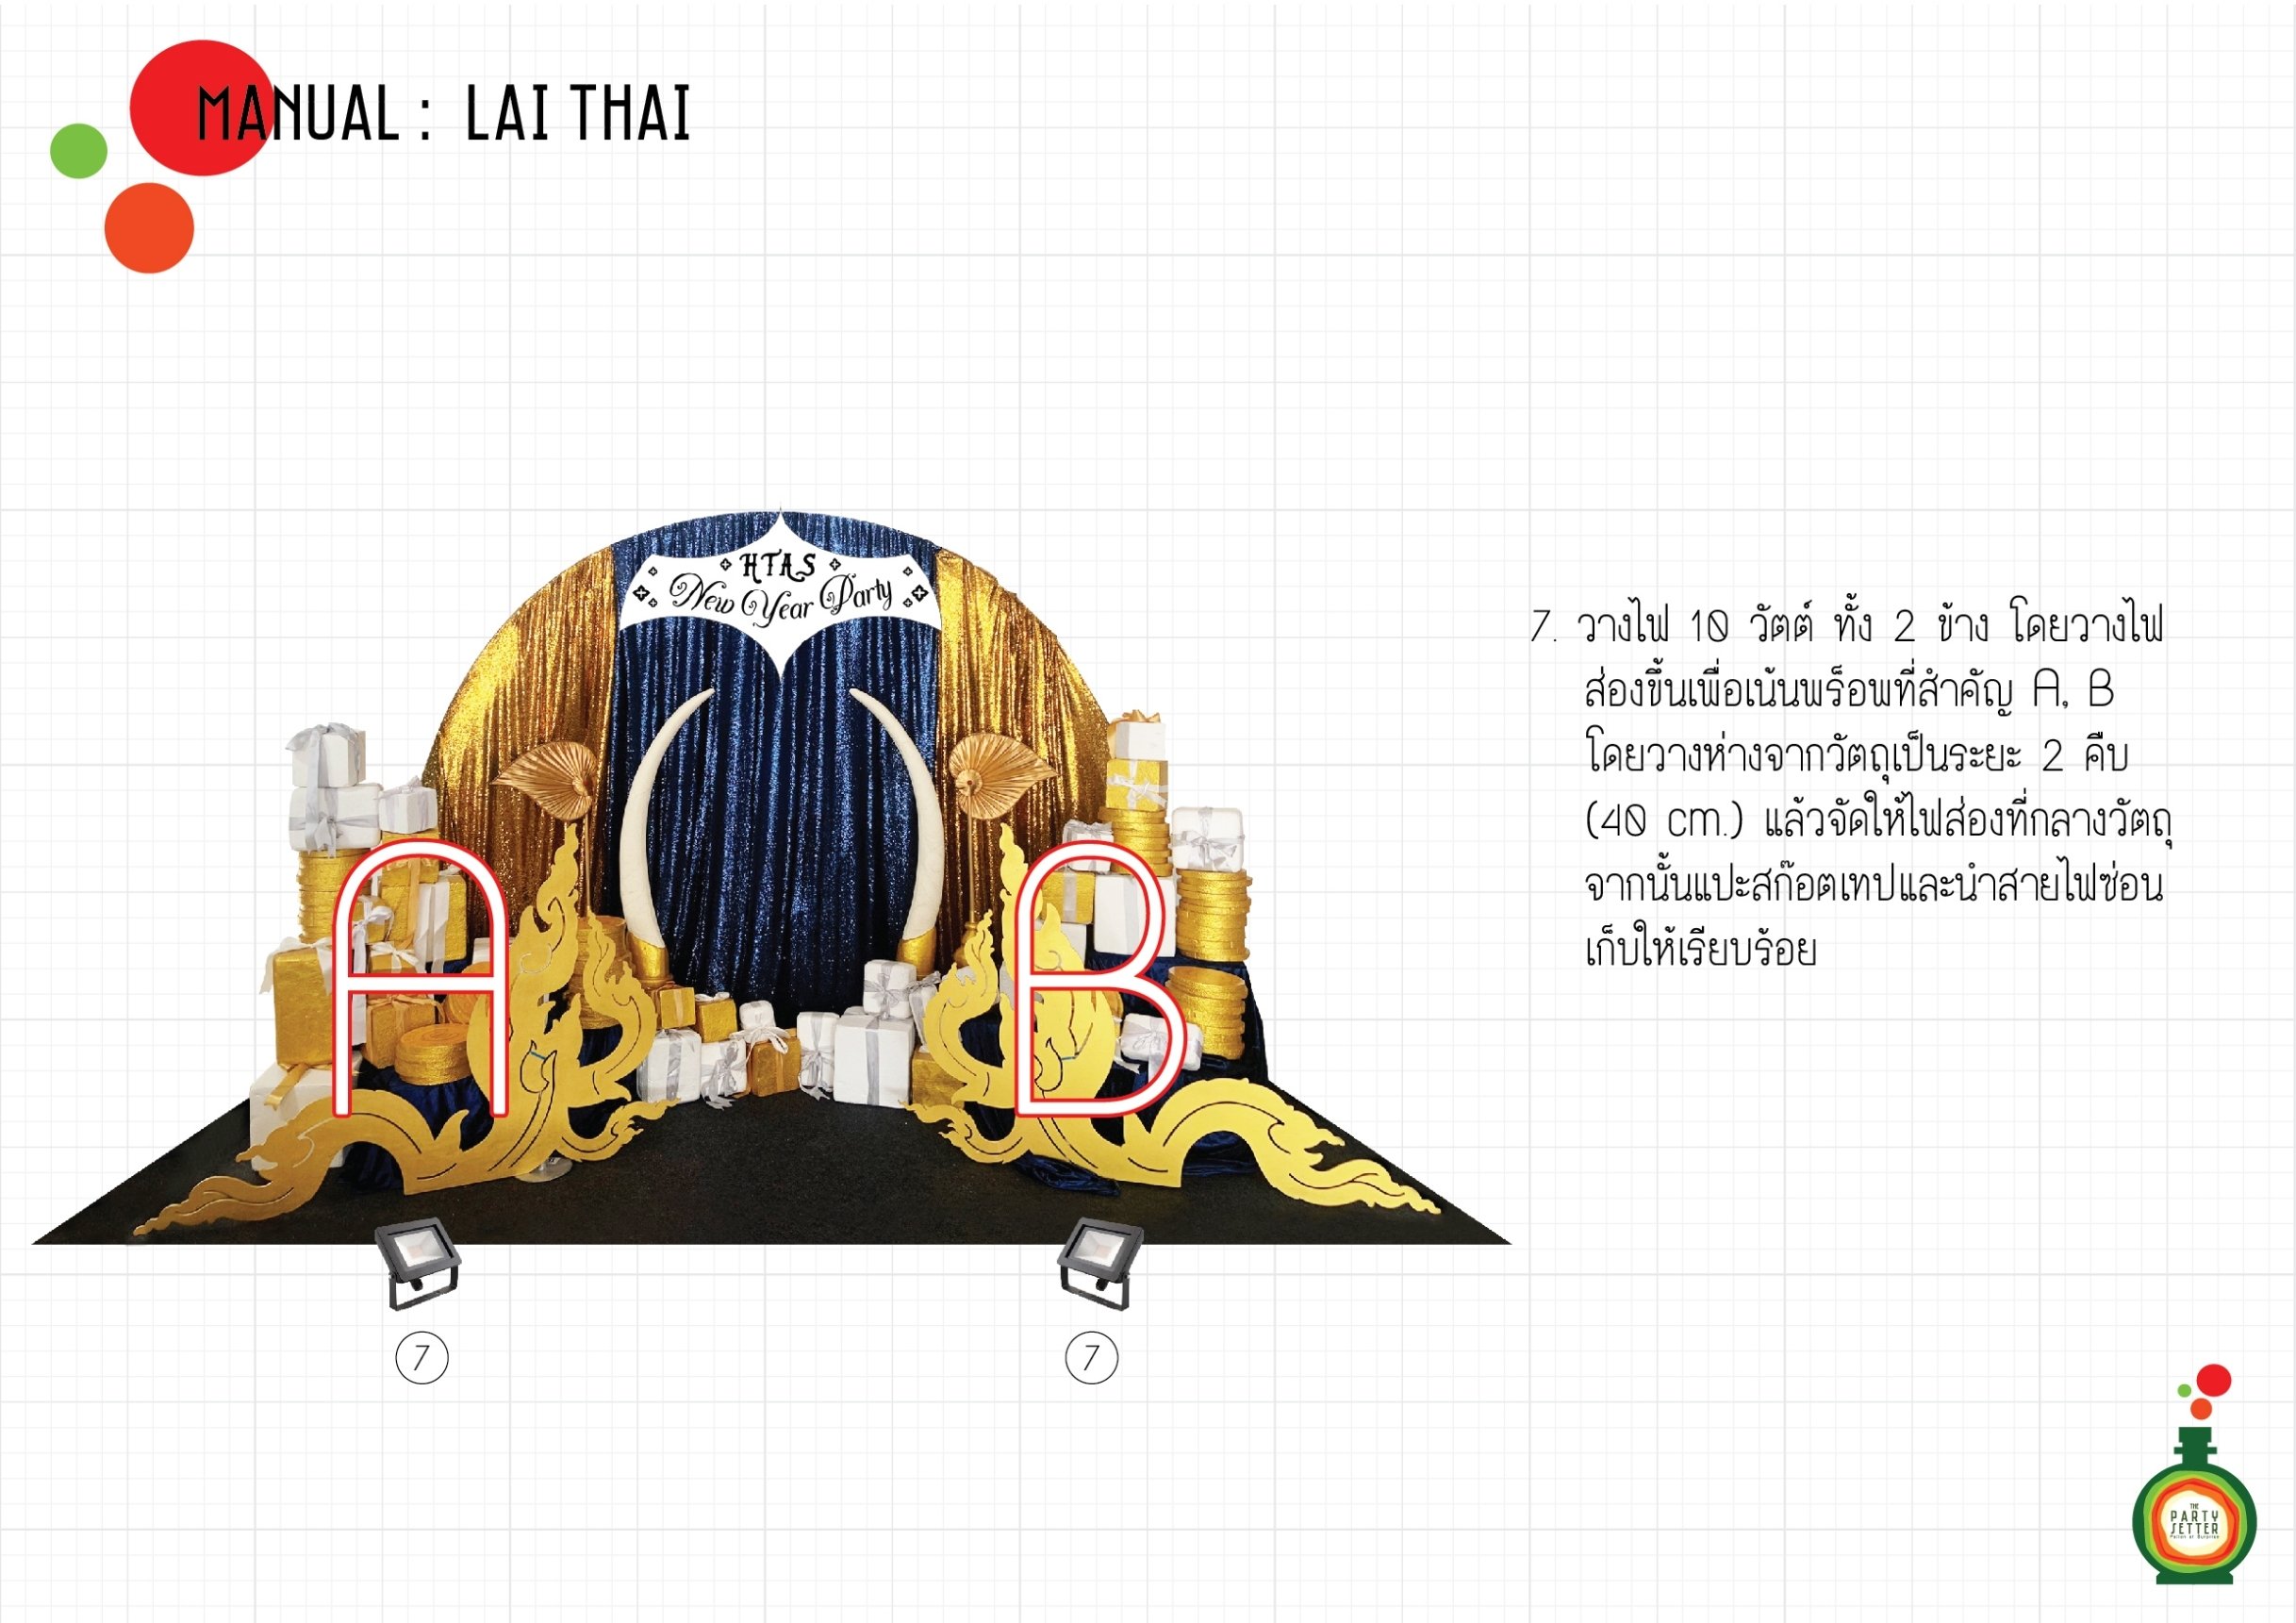 Manual_Lai Thai_07-01.jpg